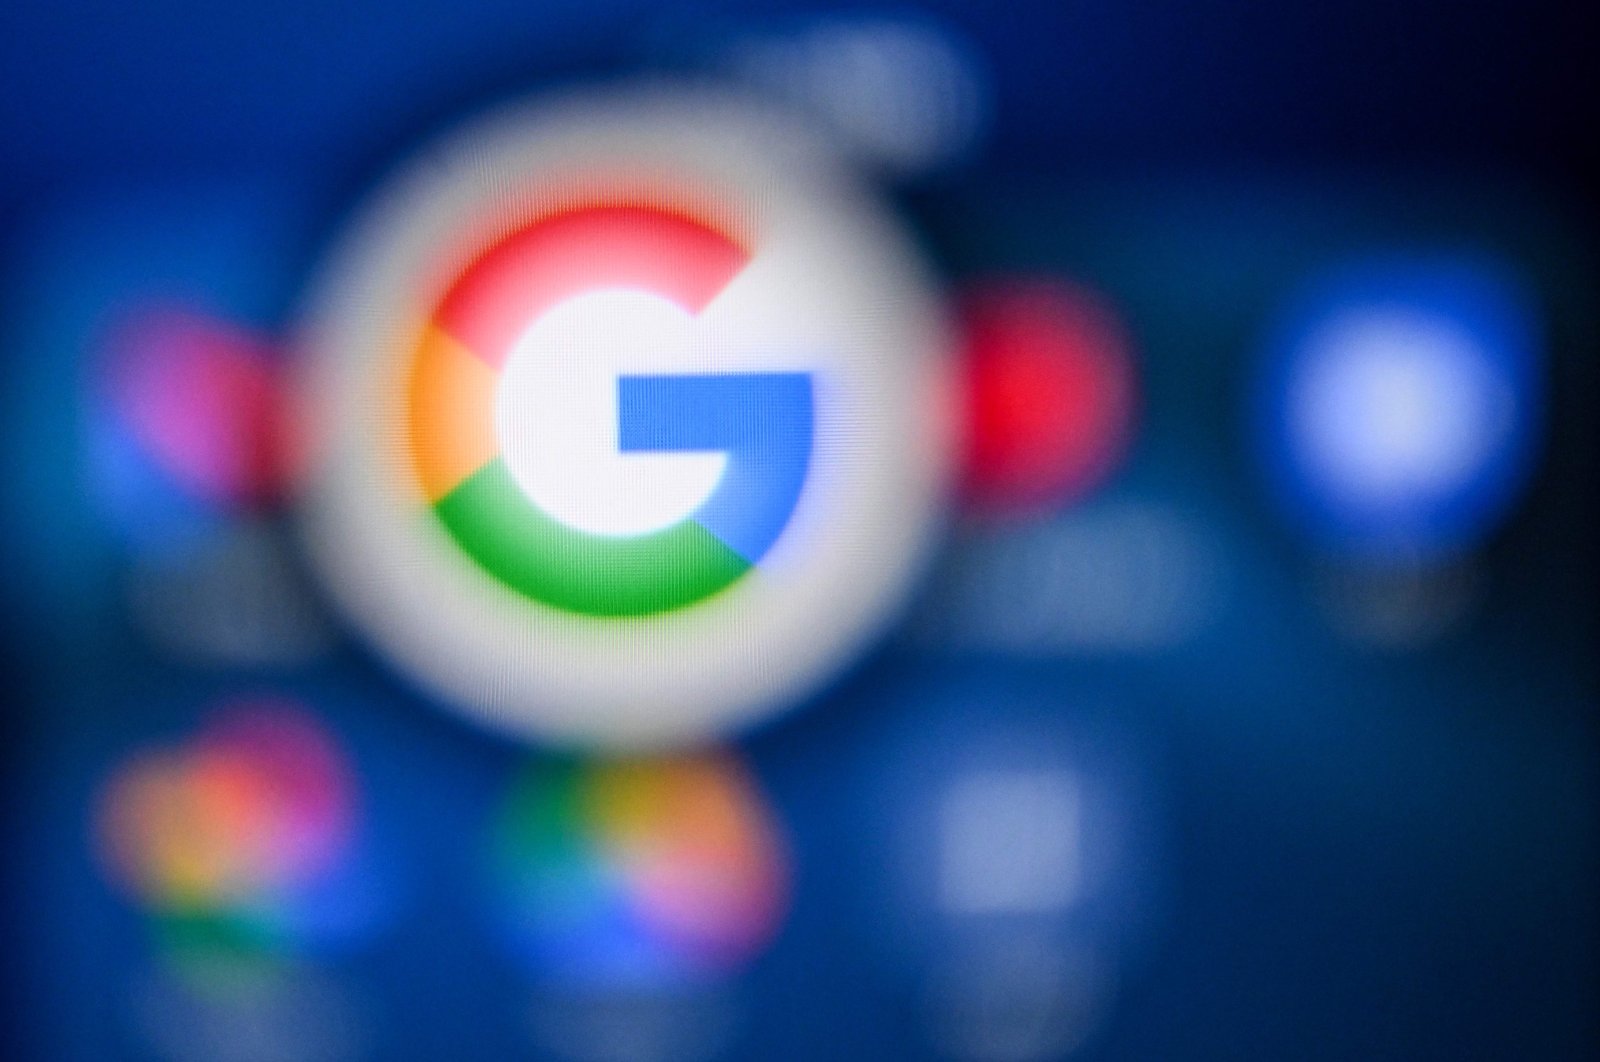 Turki akan mengikuti Eropa dalam kesepakatan hak cipta dengan Google